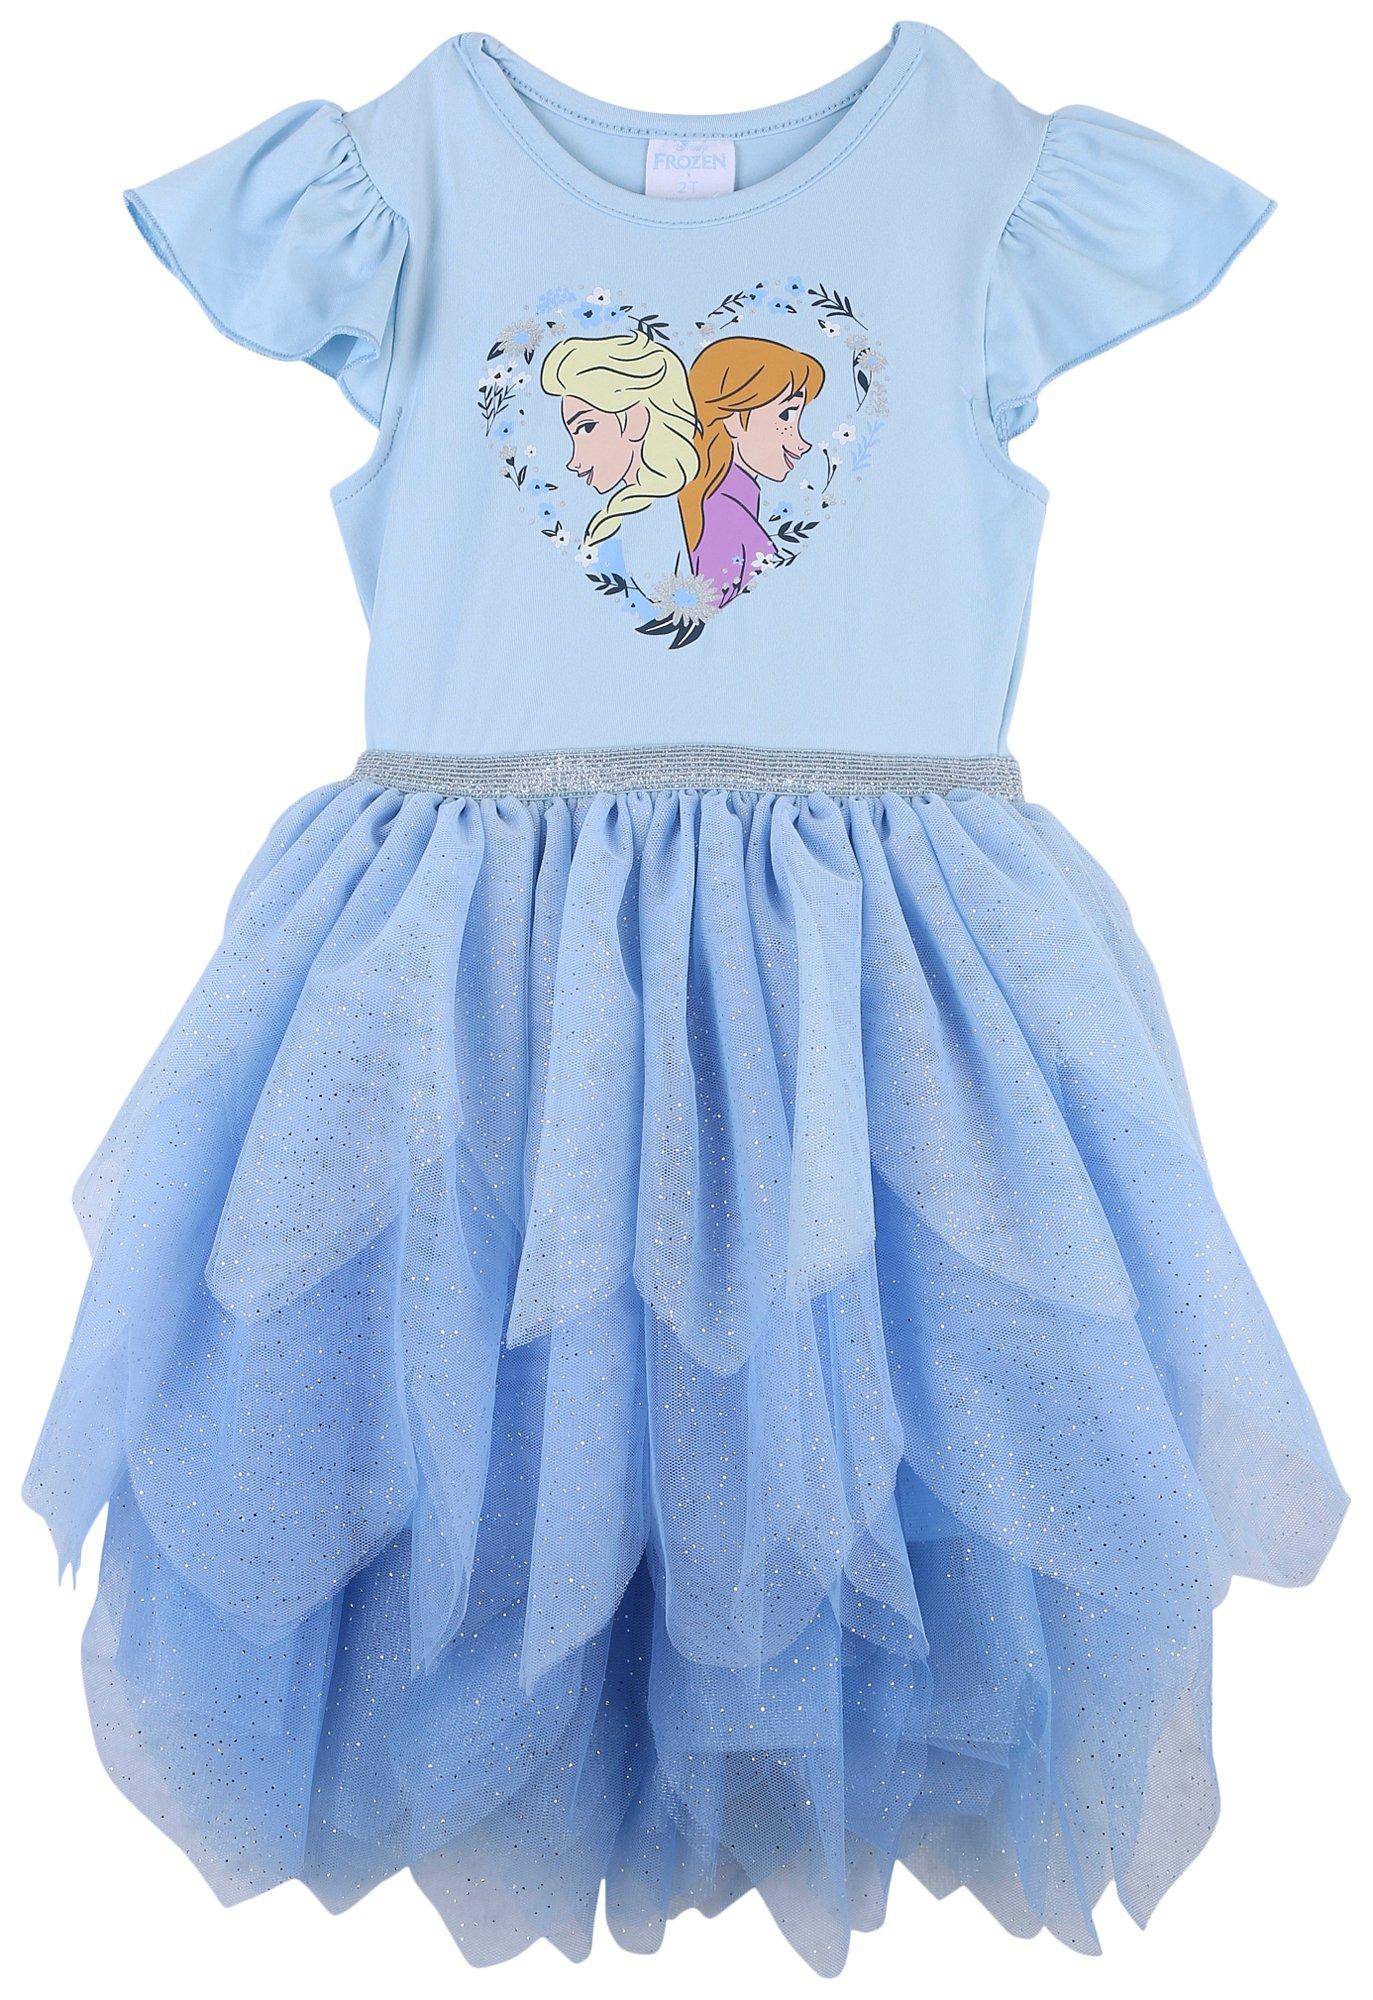 Toddler Girls Overlay Frozen Tutu Dress